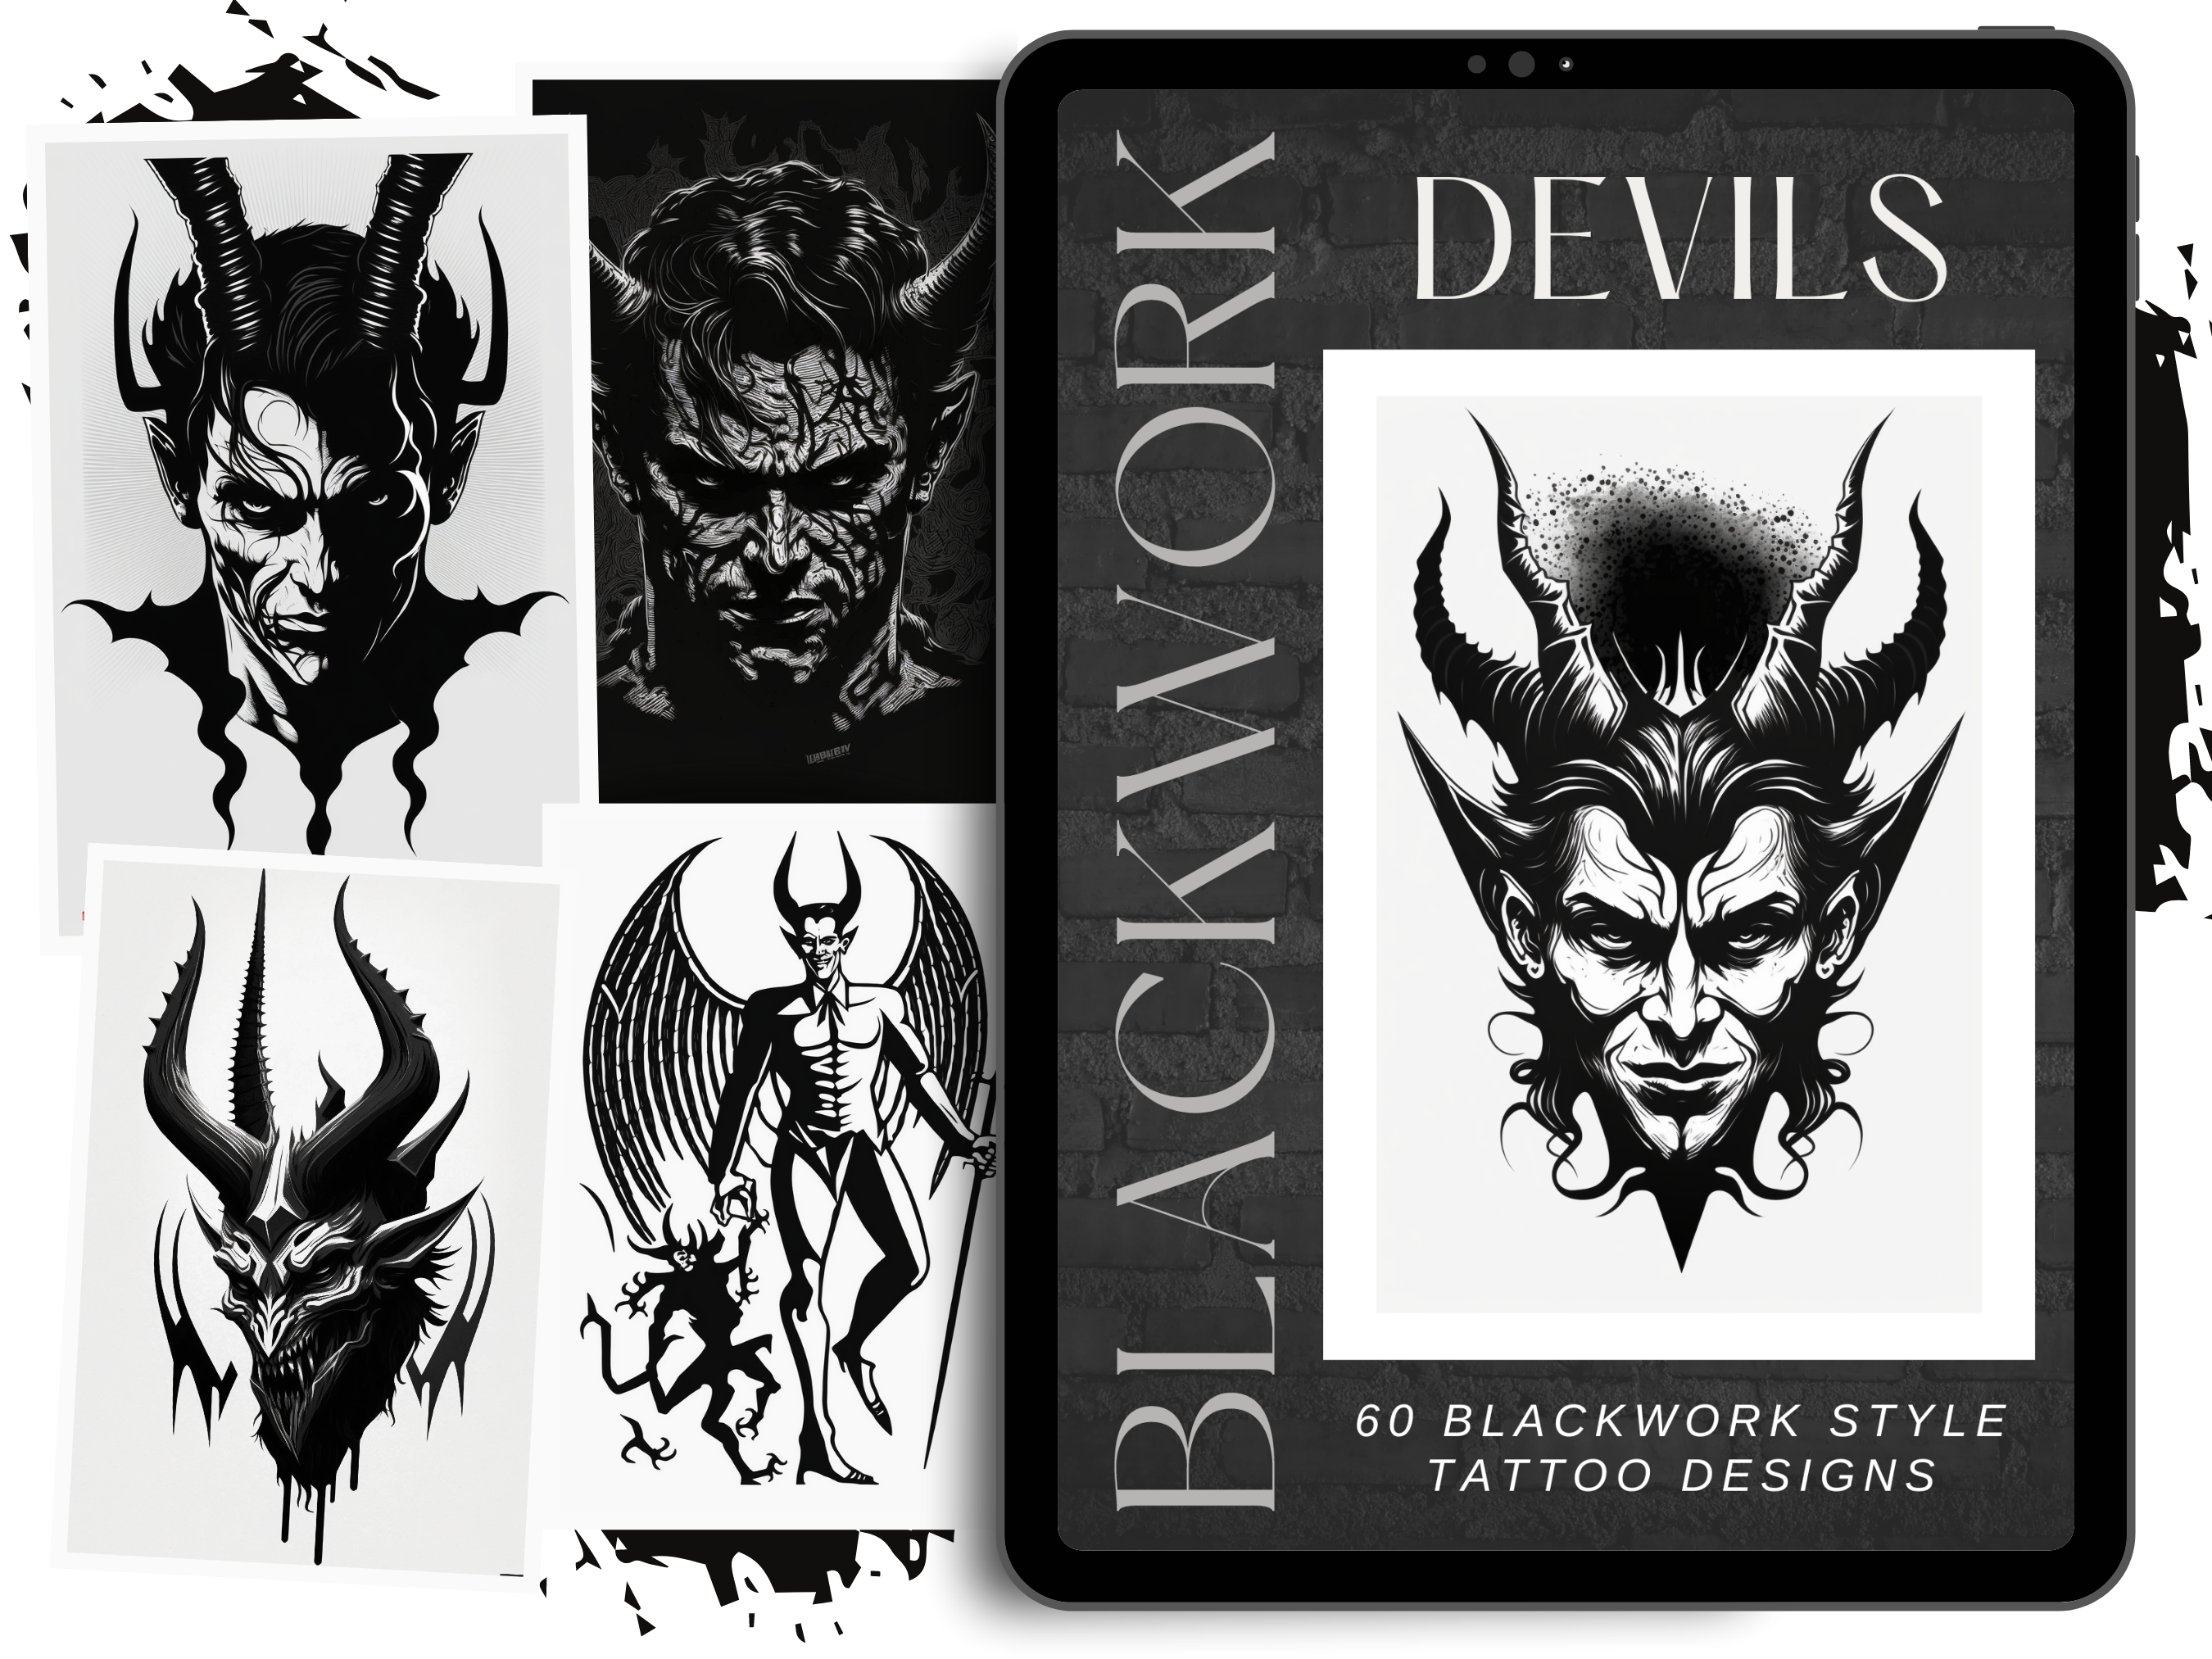 Tattoo Book Mixed Skull Devil Design Tattoo Art Book Flash Sketch Supplies  | eBay